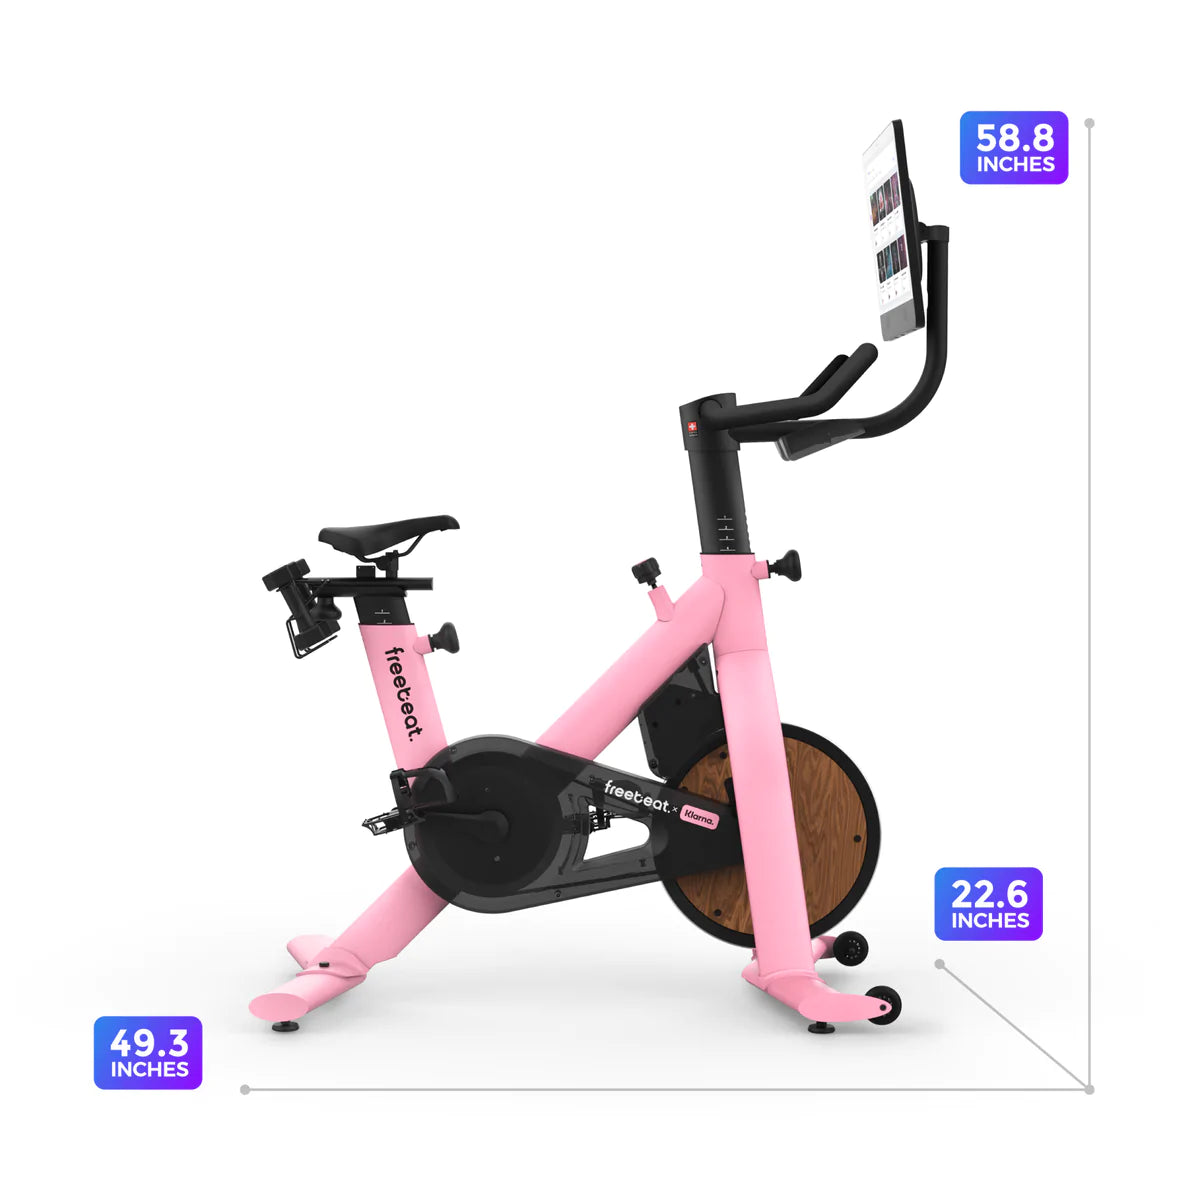 freebeat pink exercise bike lit bike dimension